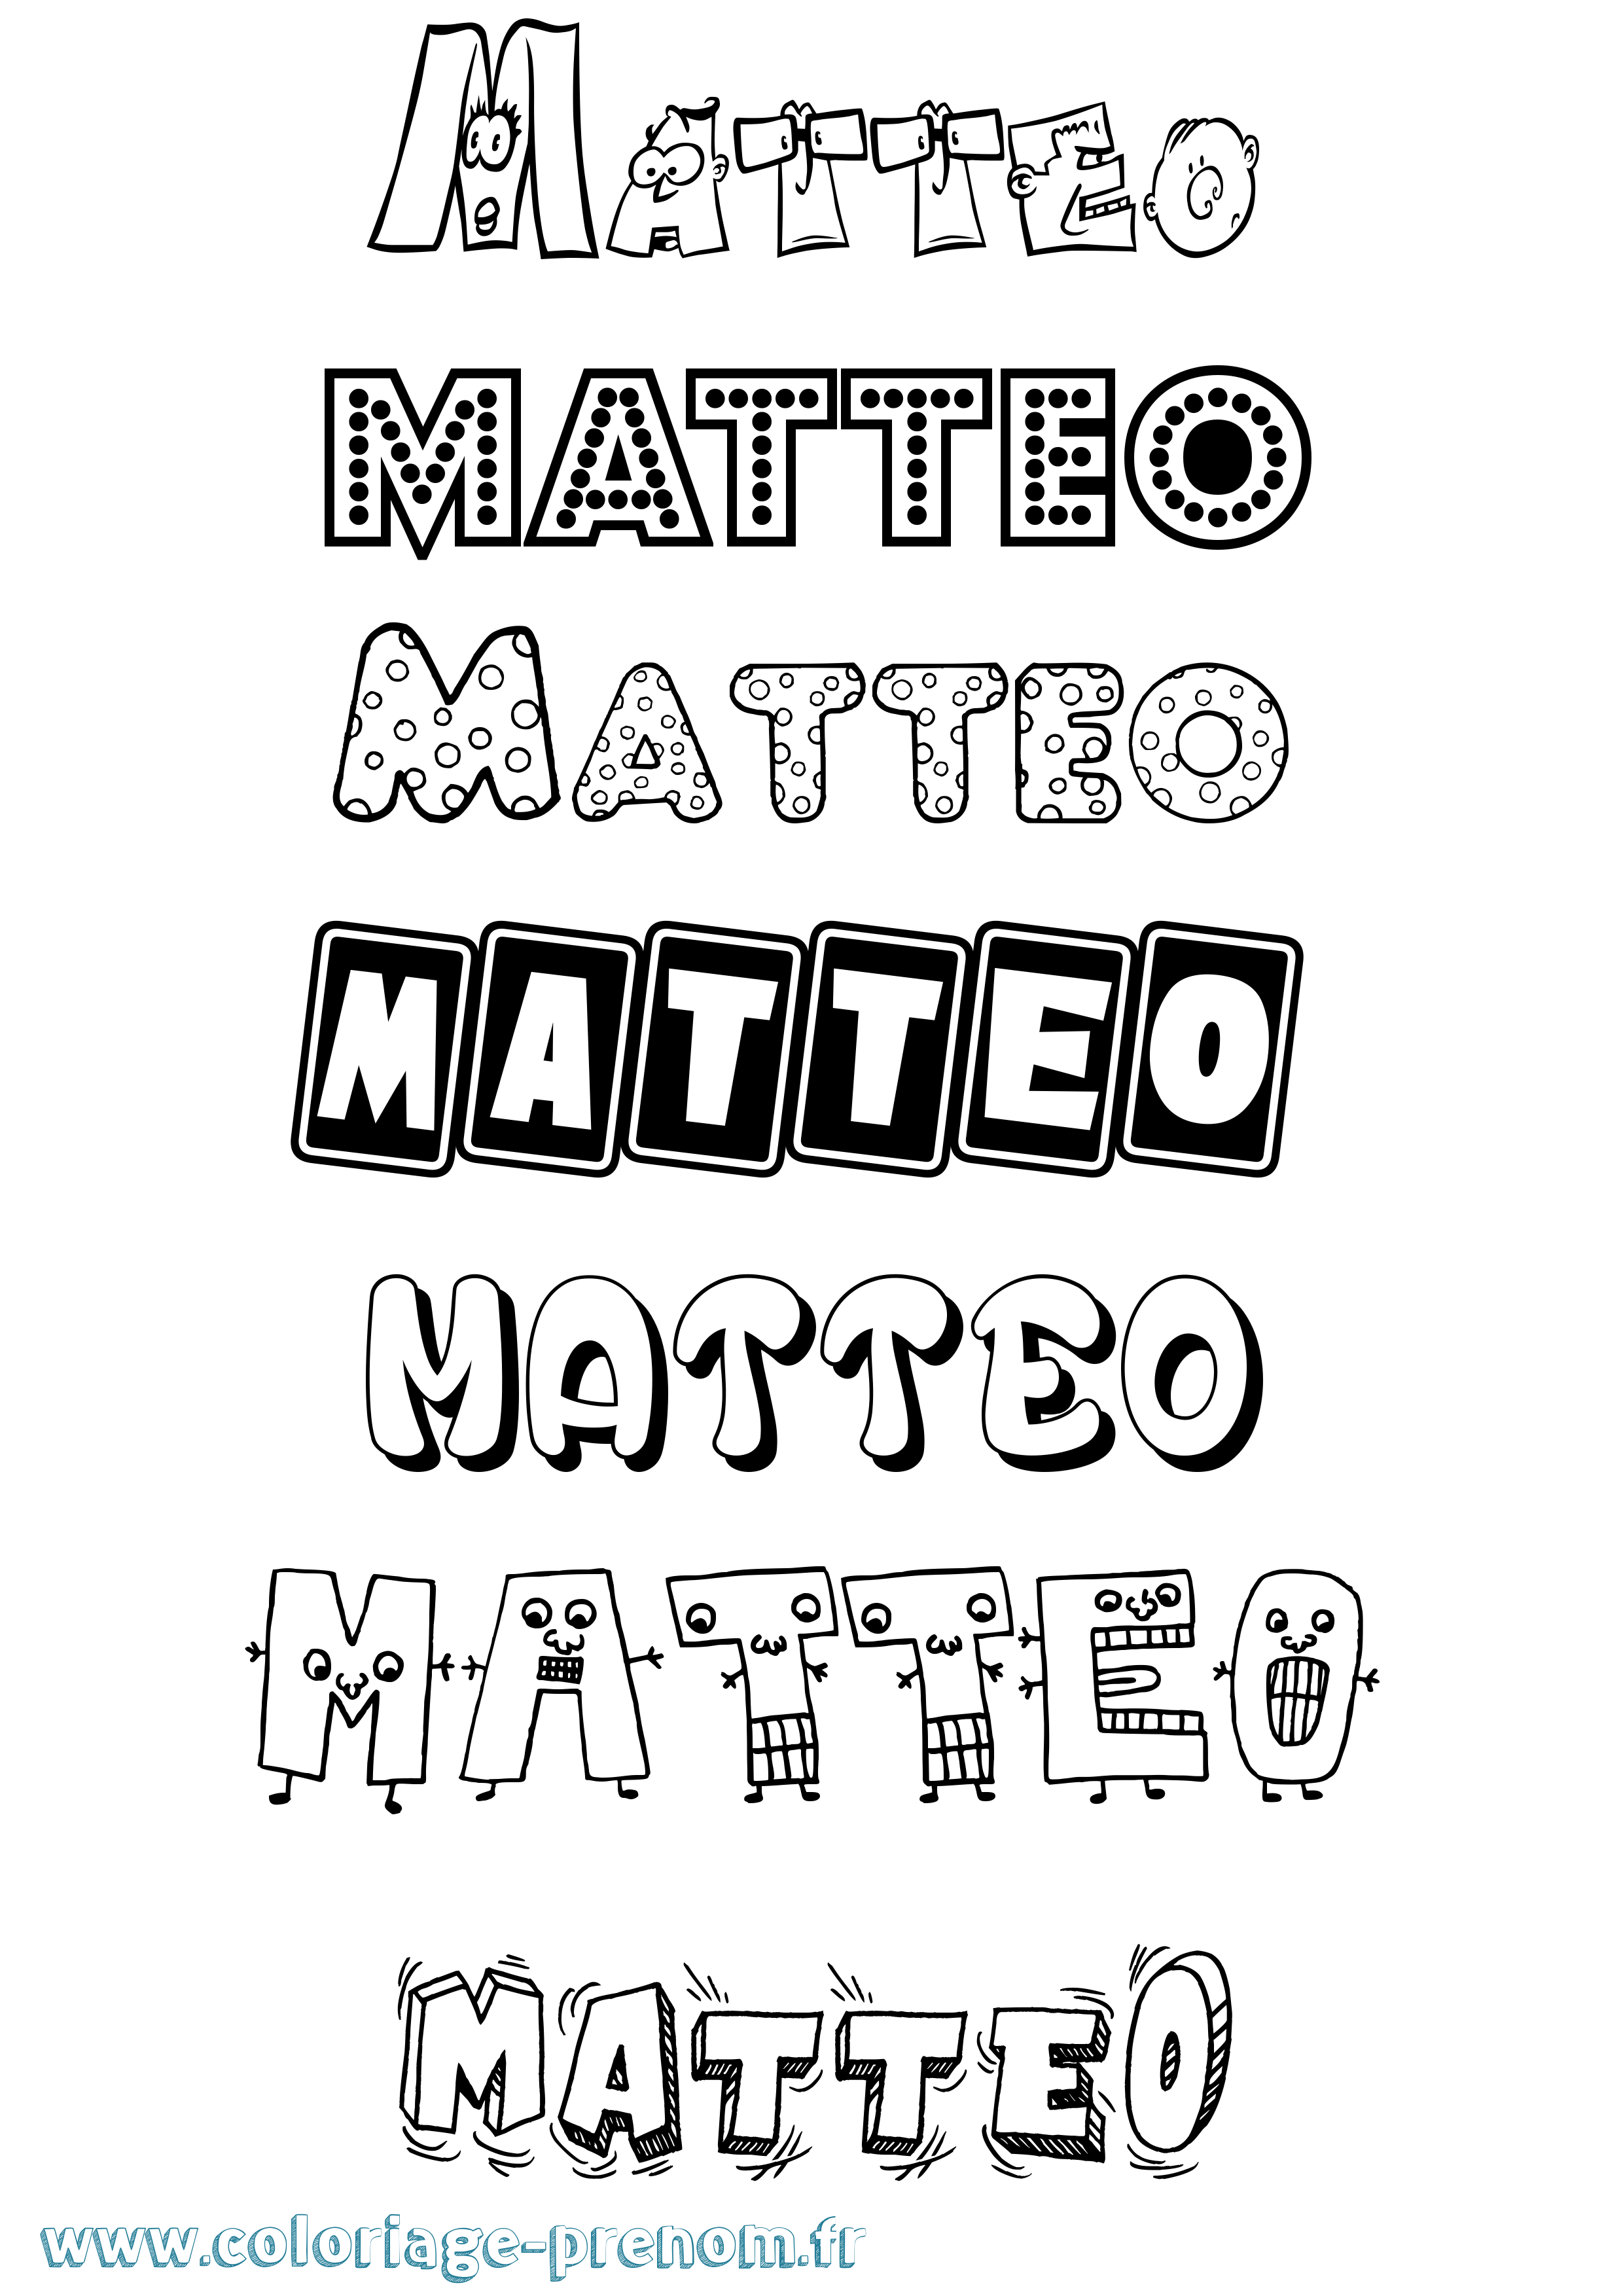 Coloriage prénom Matteo